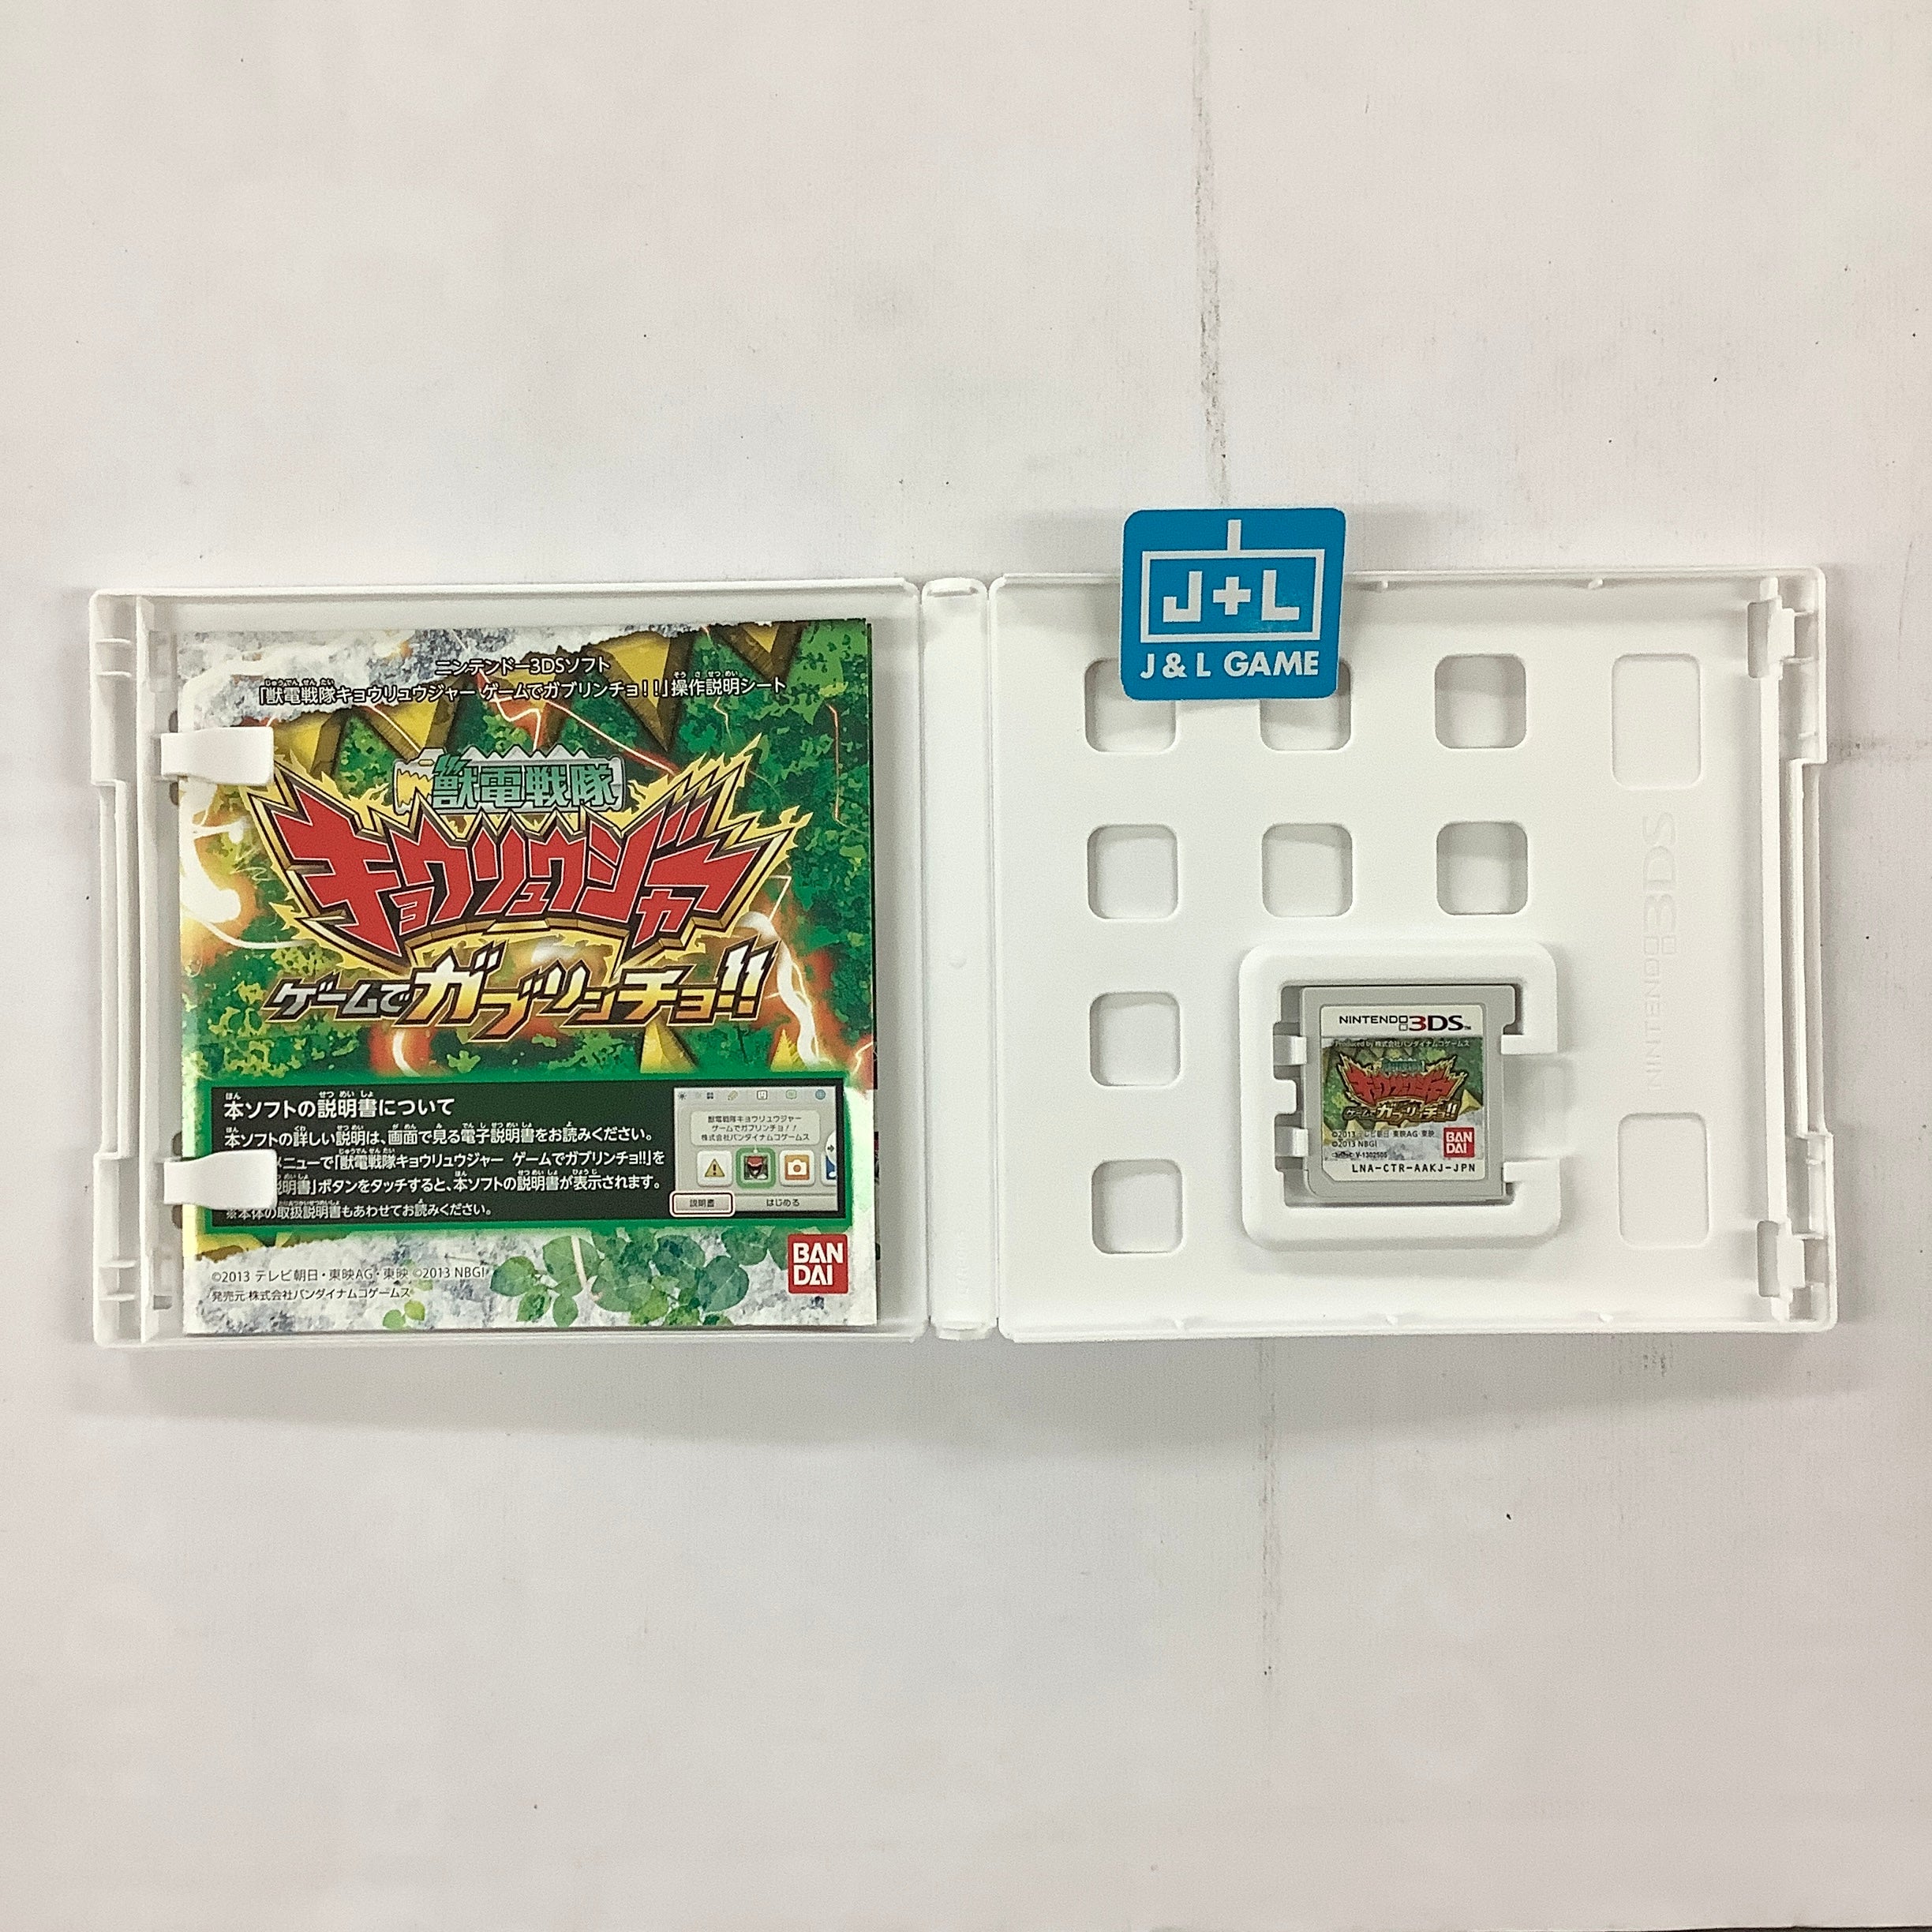 Zyuden Sentai Kyoryuger: Game de Gaburincho!! - Nintendo 3DS [Pre-Owned] (Japanese Import) Video Games Bandai Namco Games   